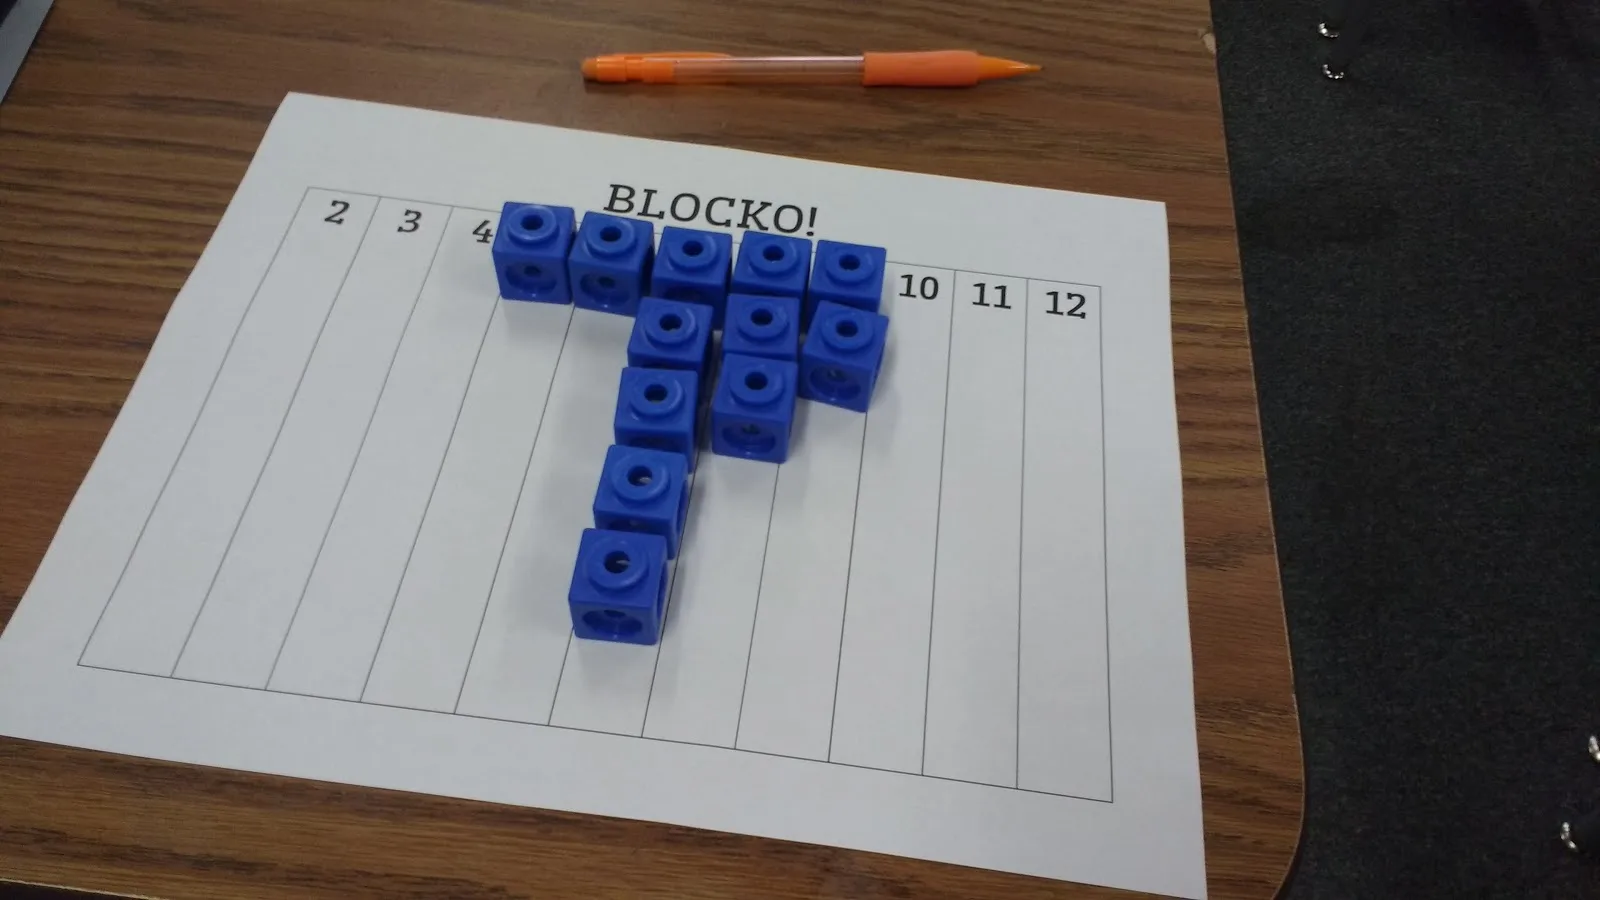 blocko game experimental theoretical probability